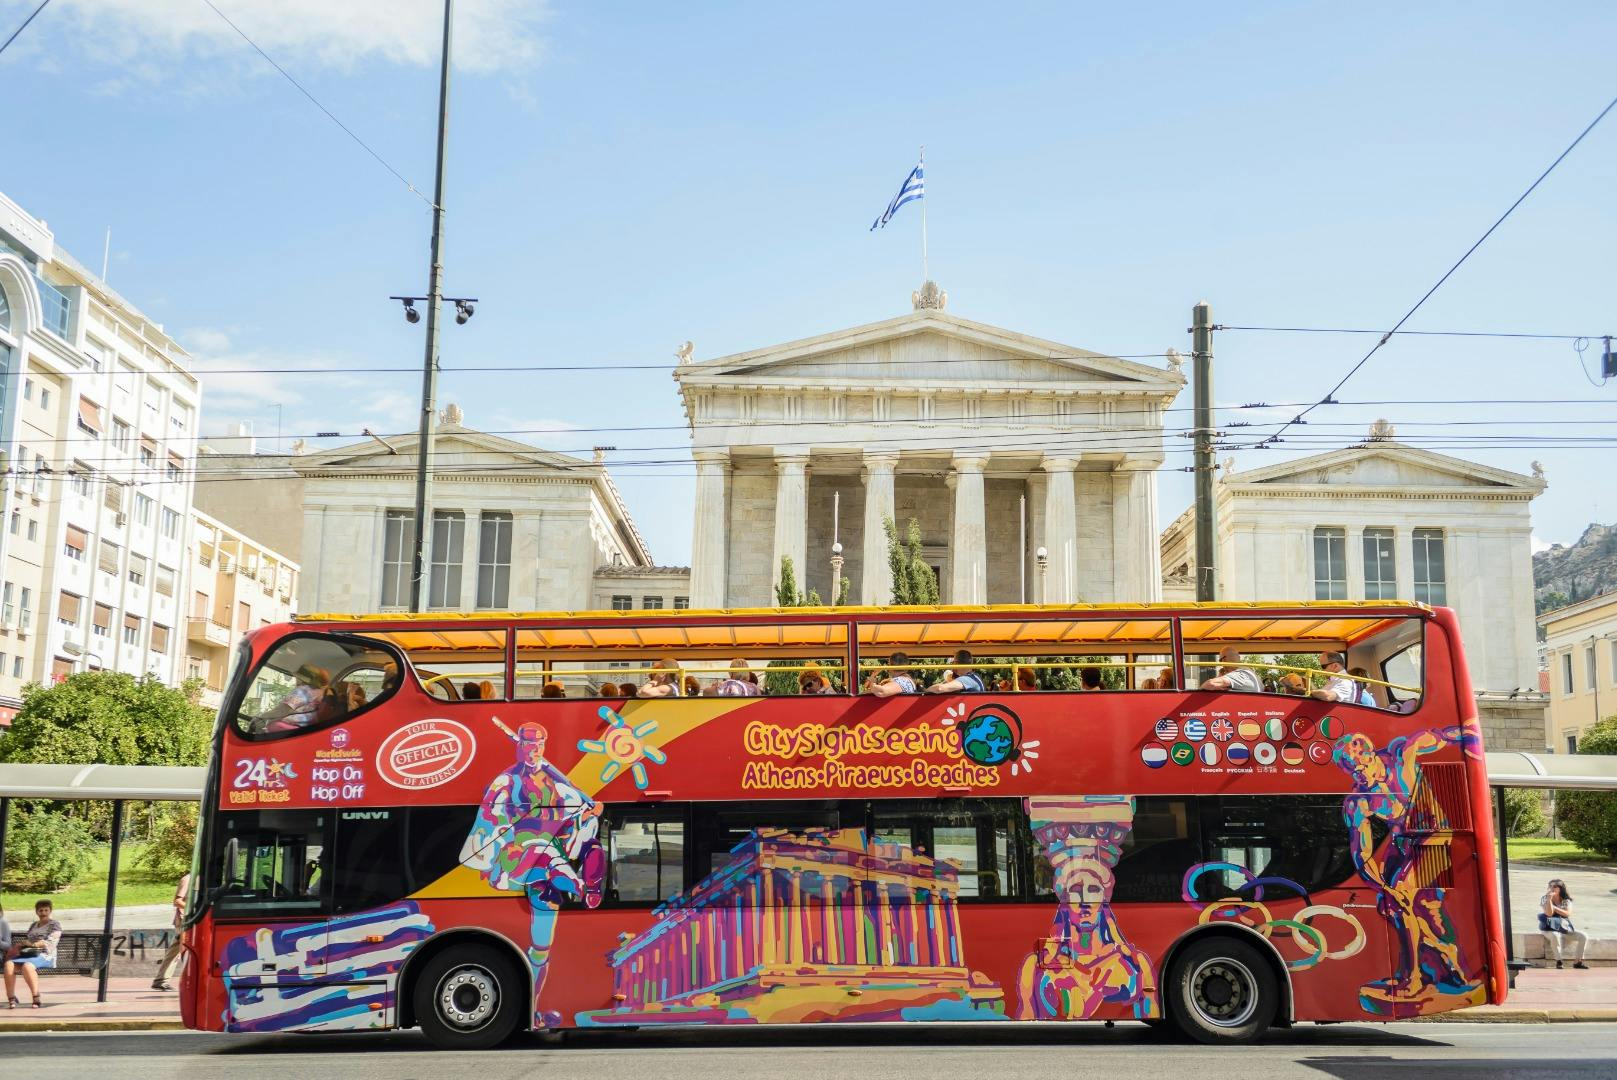 Wycieczka autobusowa po Atenach typu hop-on hop-off City Sightseeing